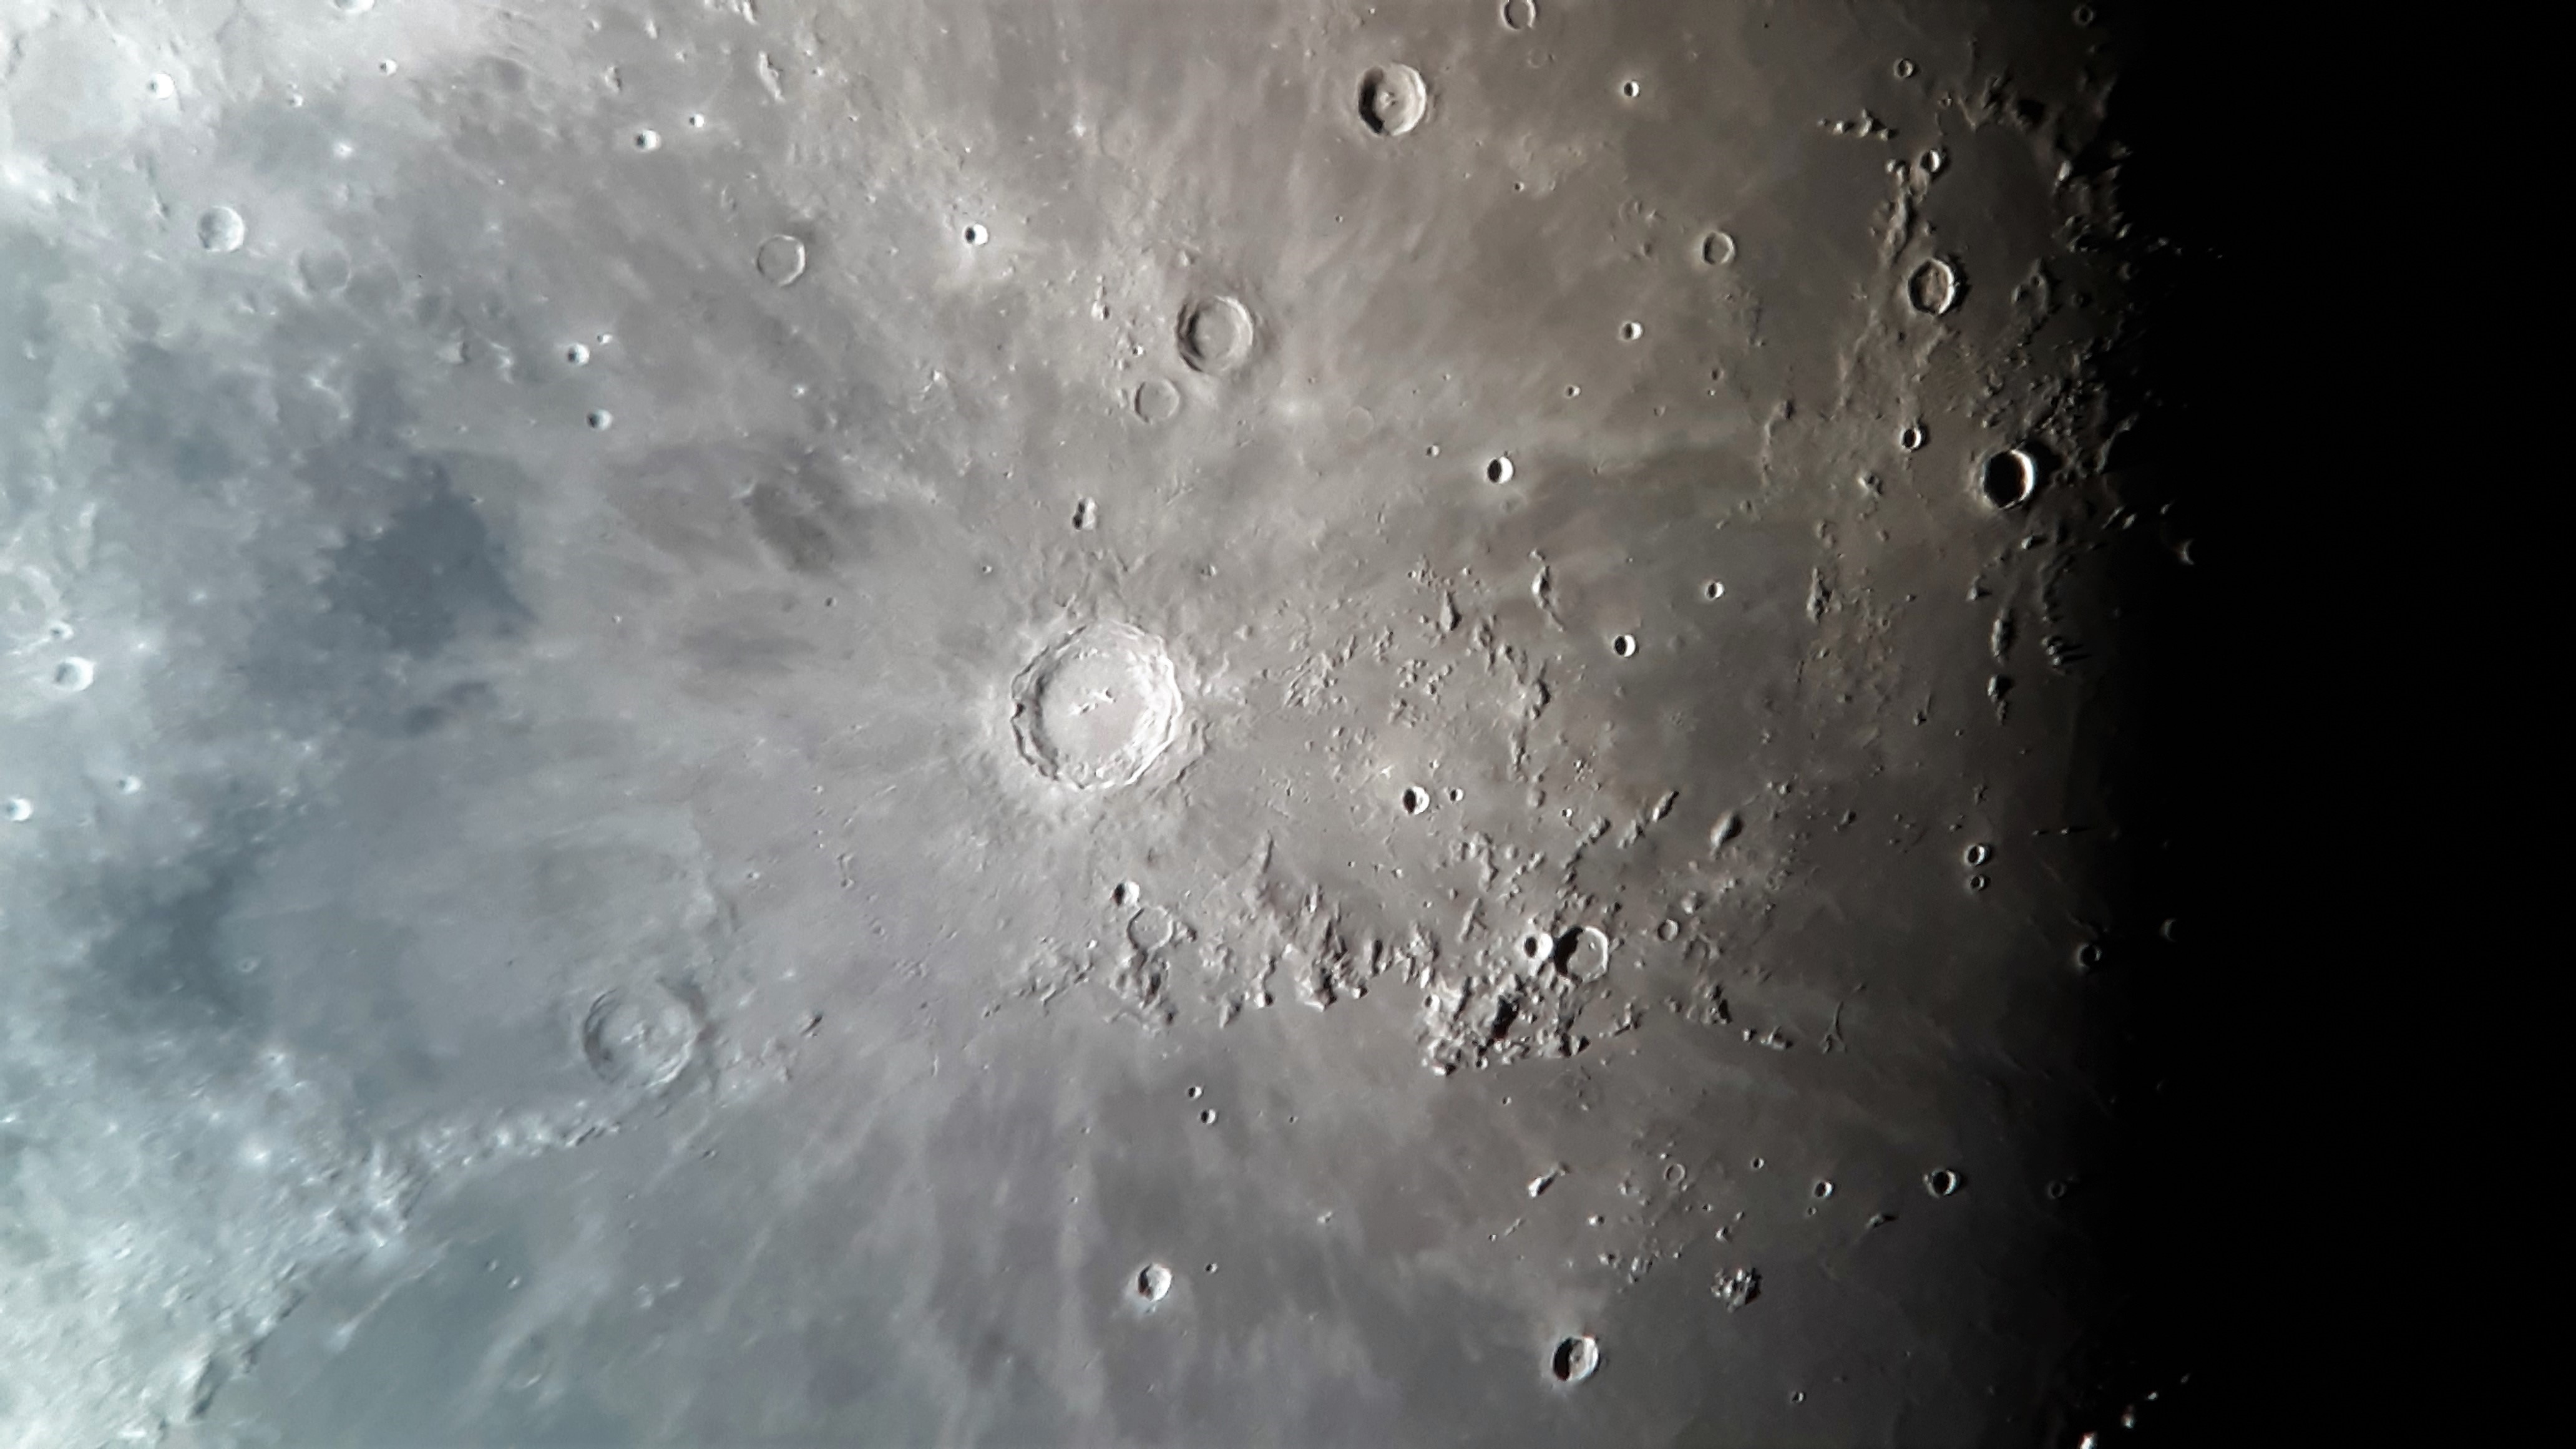 Copernicus moon crater photo taken through a telescope